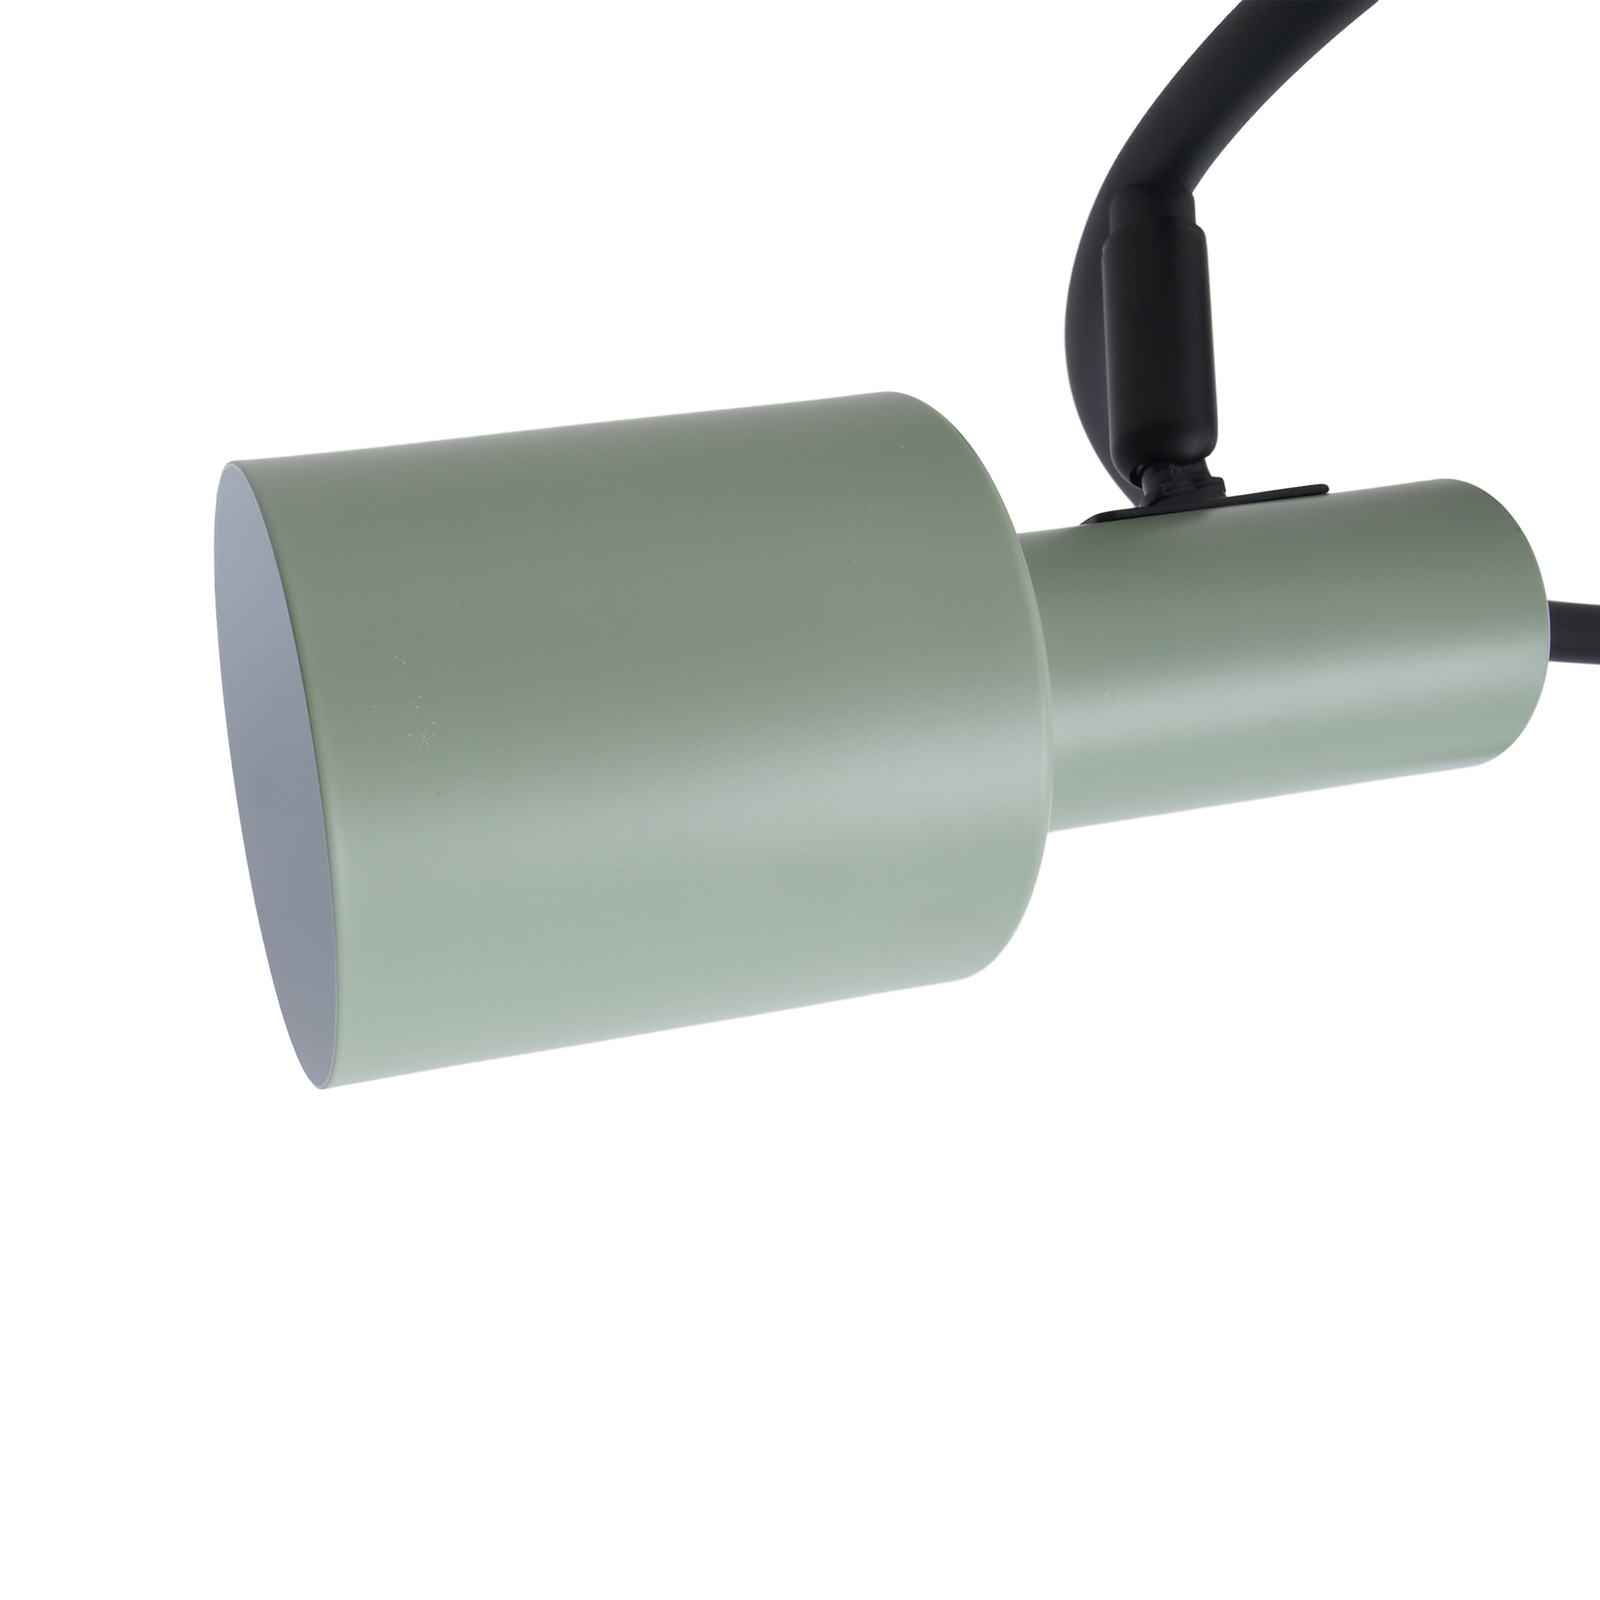 Lindby downlight Ovelia, green/black, round, 3-bulb.